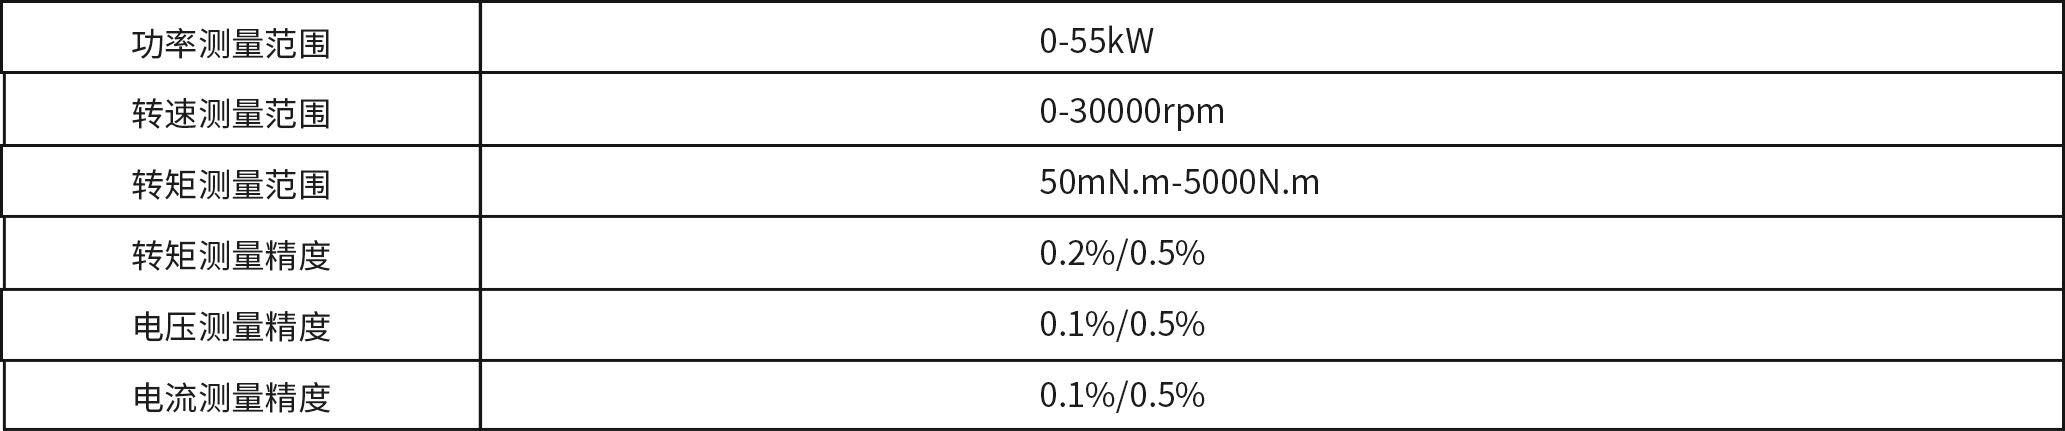 0-55kW 0-30000rpm 50mN.m-5000N.m 0.2%_0.5% 0.1%_0.5% 0.1%_0.5% .jpg